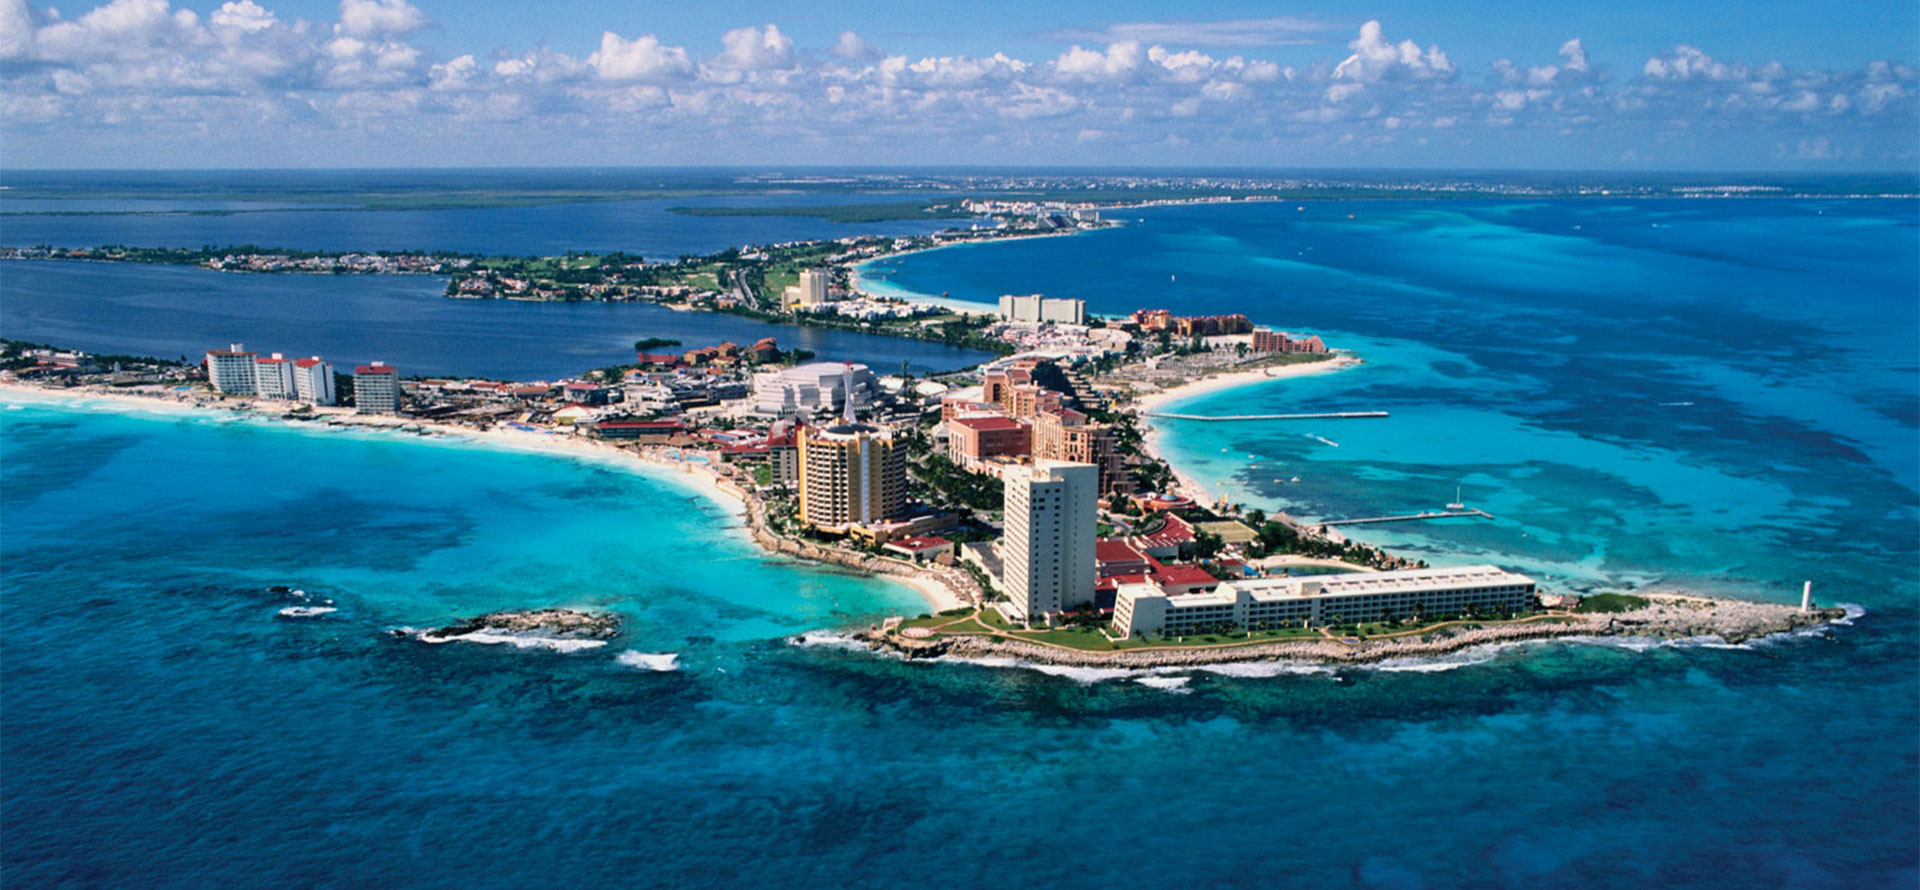 Cancun honeymoon resorts top view.